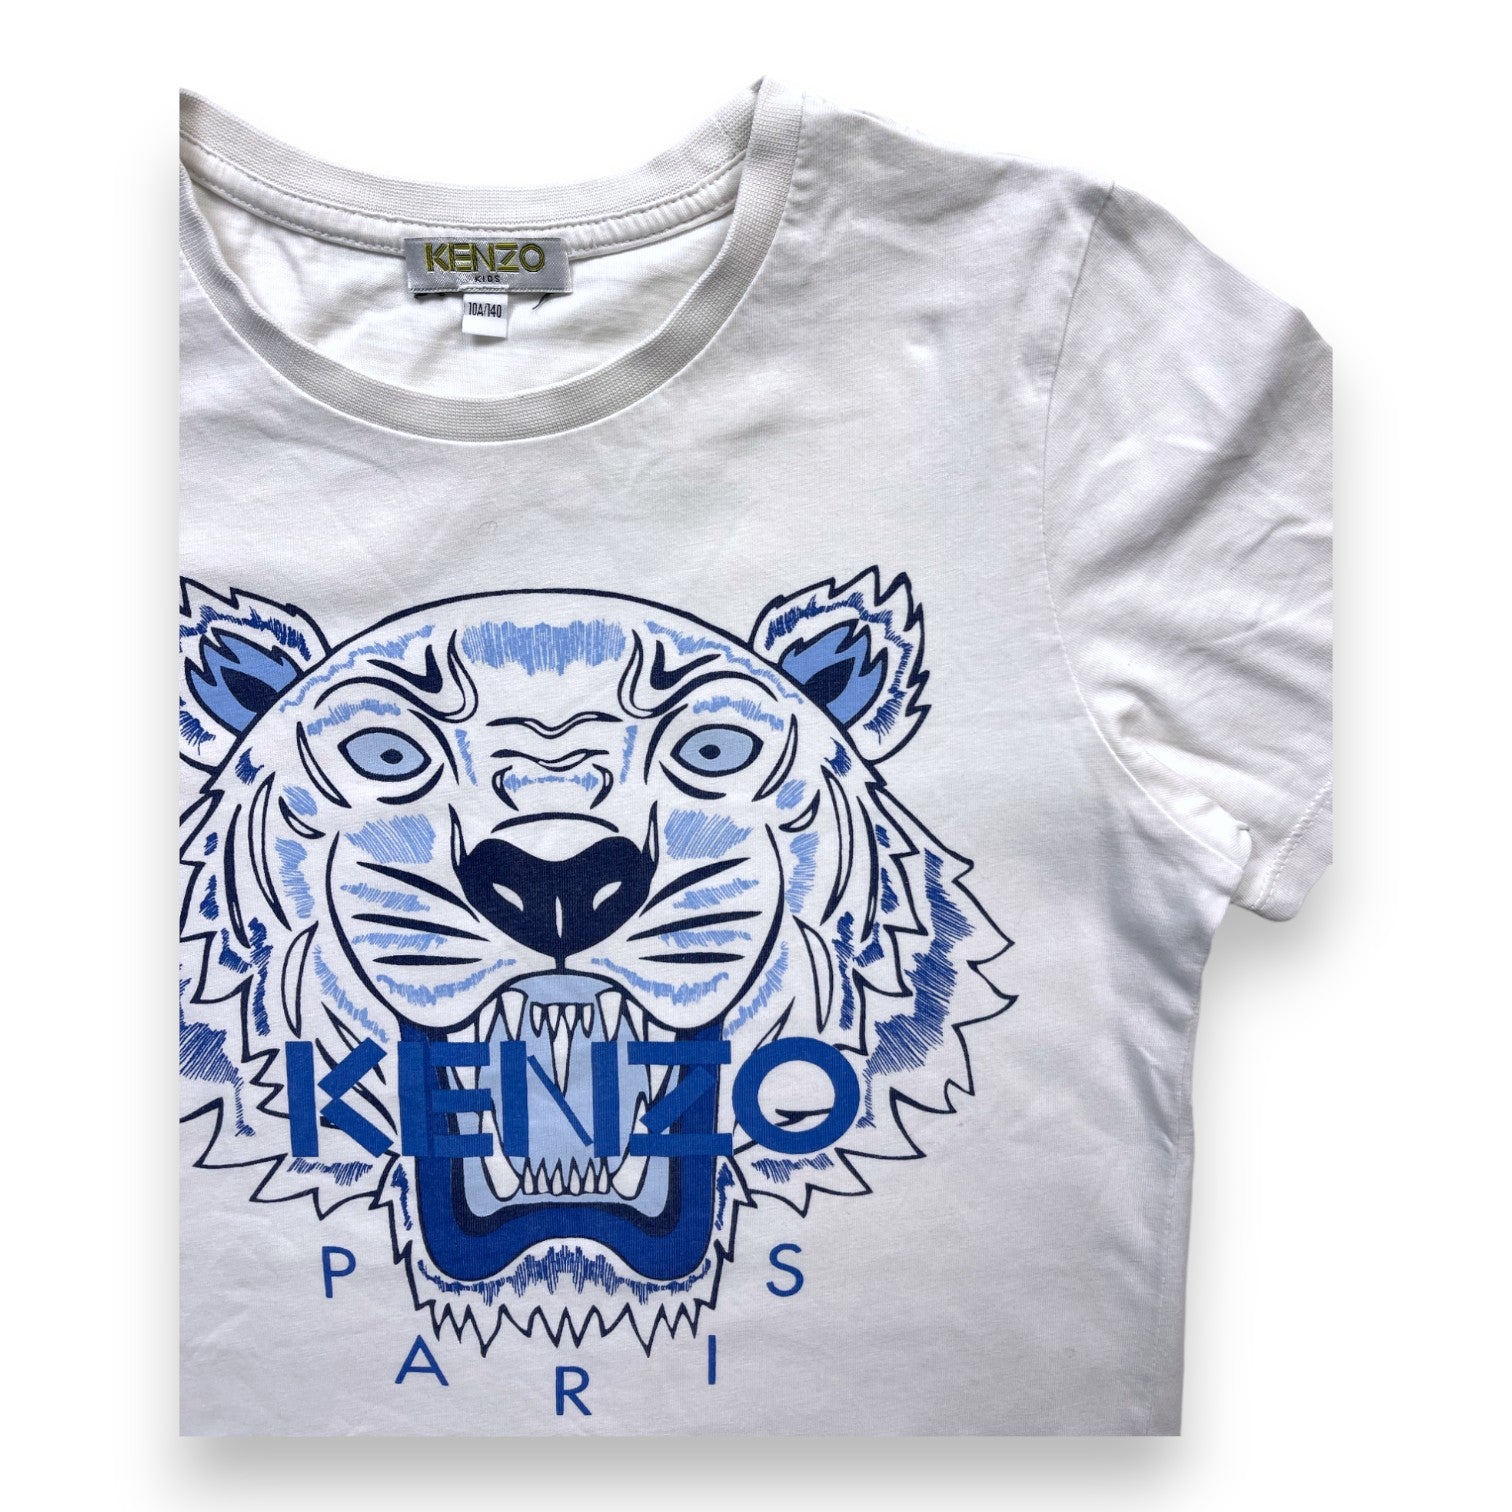 KENZO - T shirt manches courtes blanc tigre bleu - 10 ans